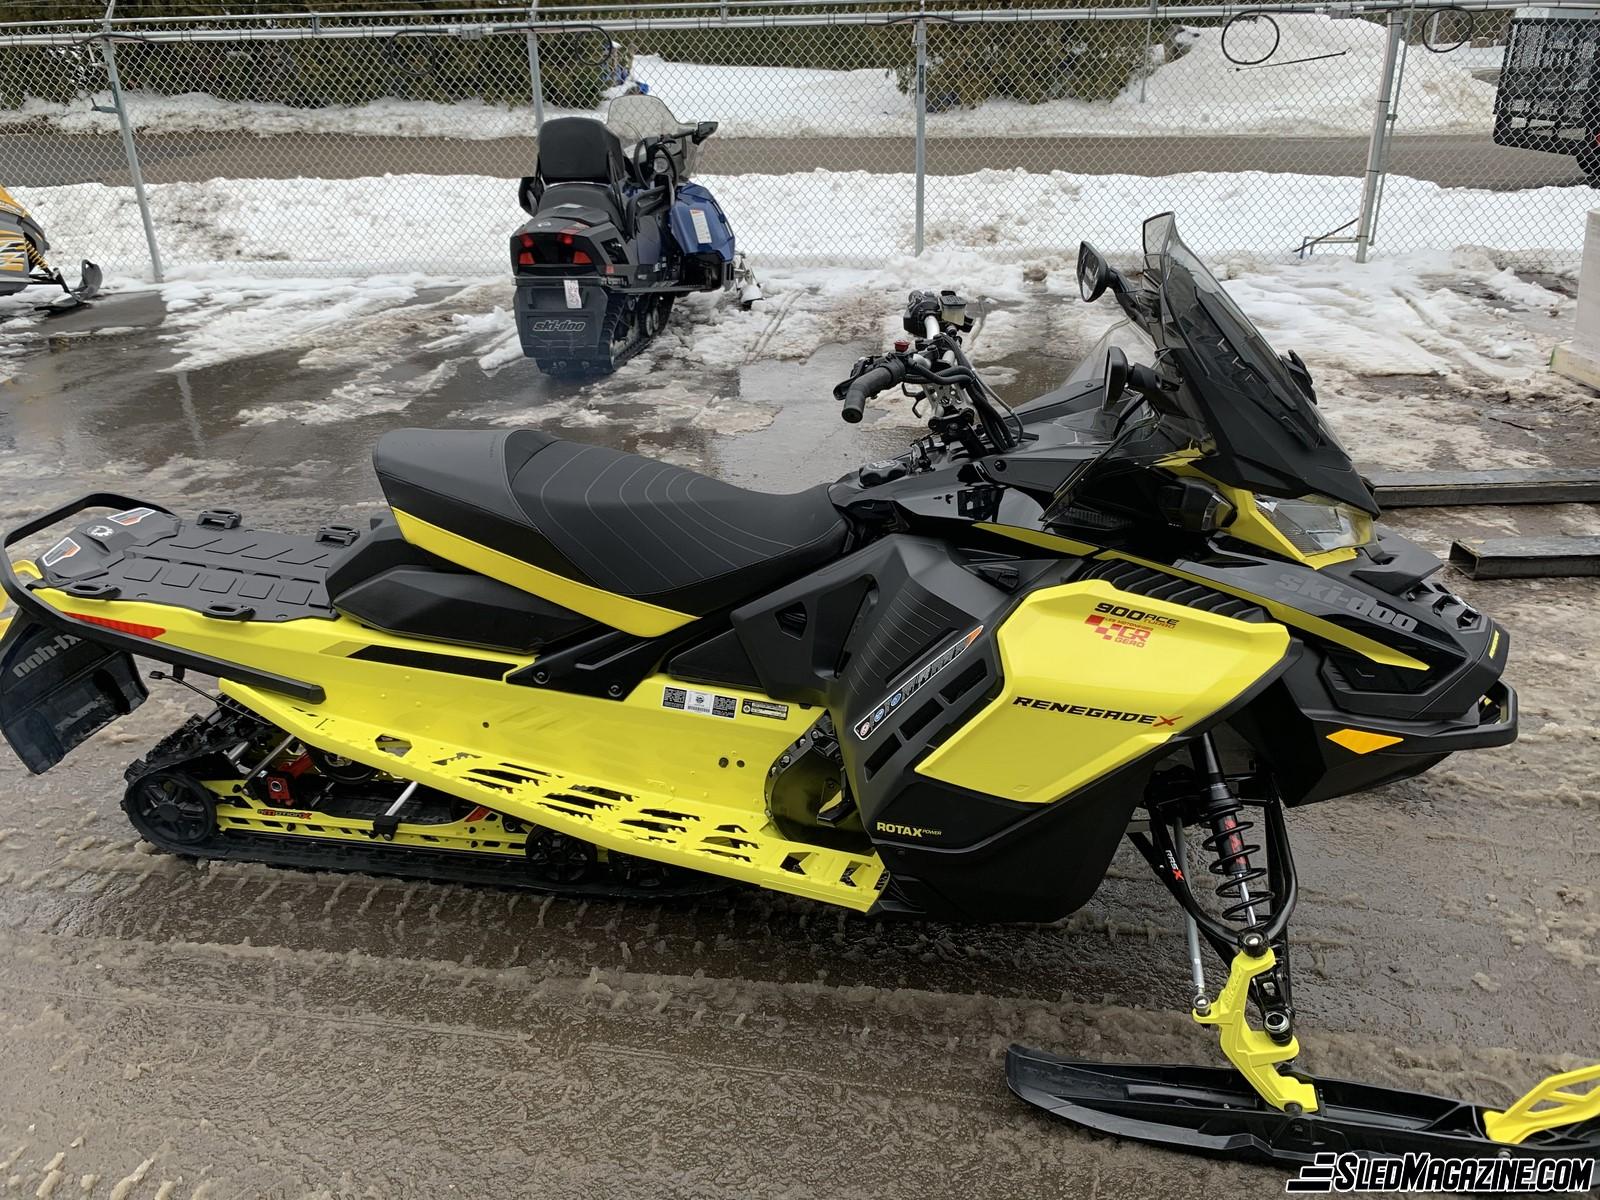 2021 Ski-Doo Renegade X 900 ACE Tur-bo 2021 – Pre-ride Analysis - Snowmobile - Snowmobiler